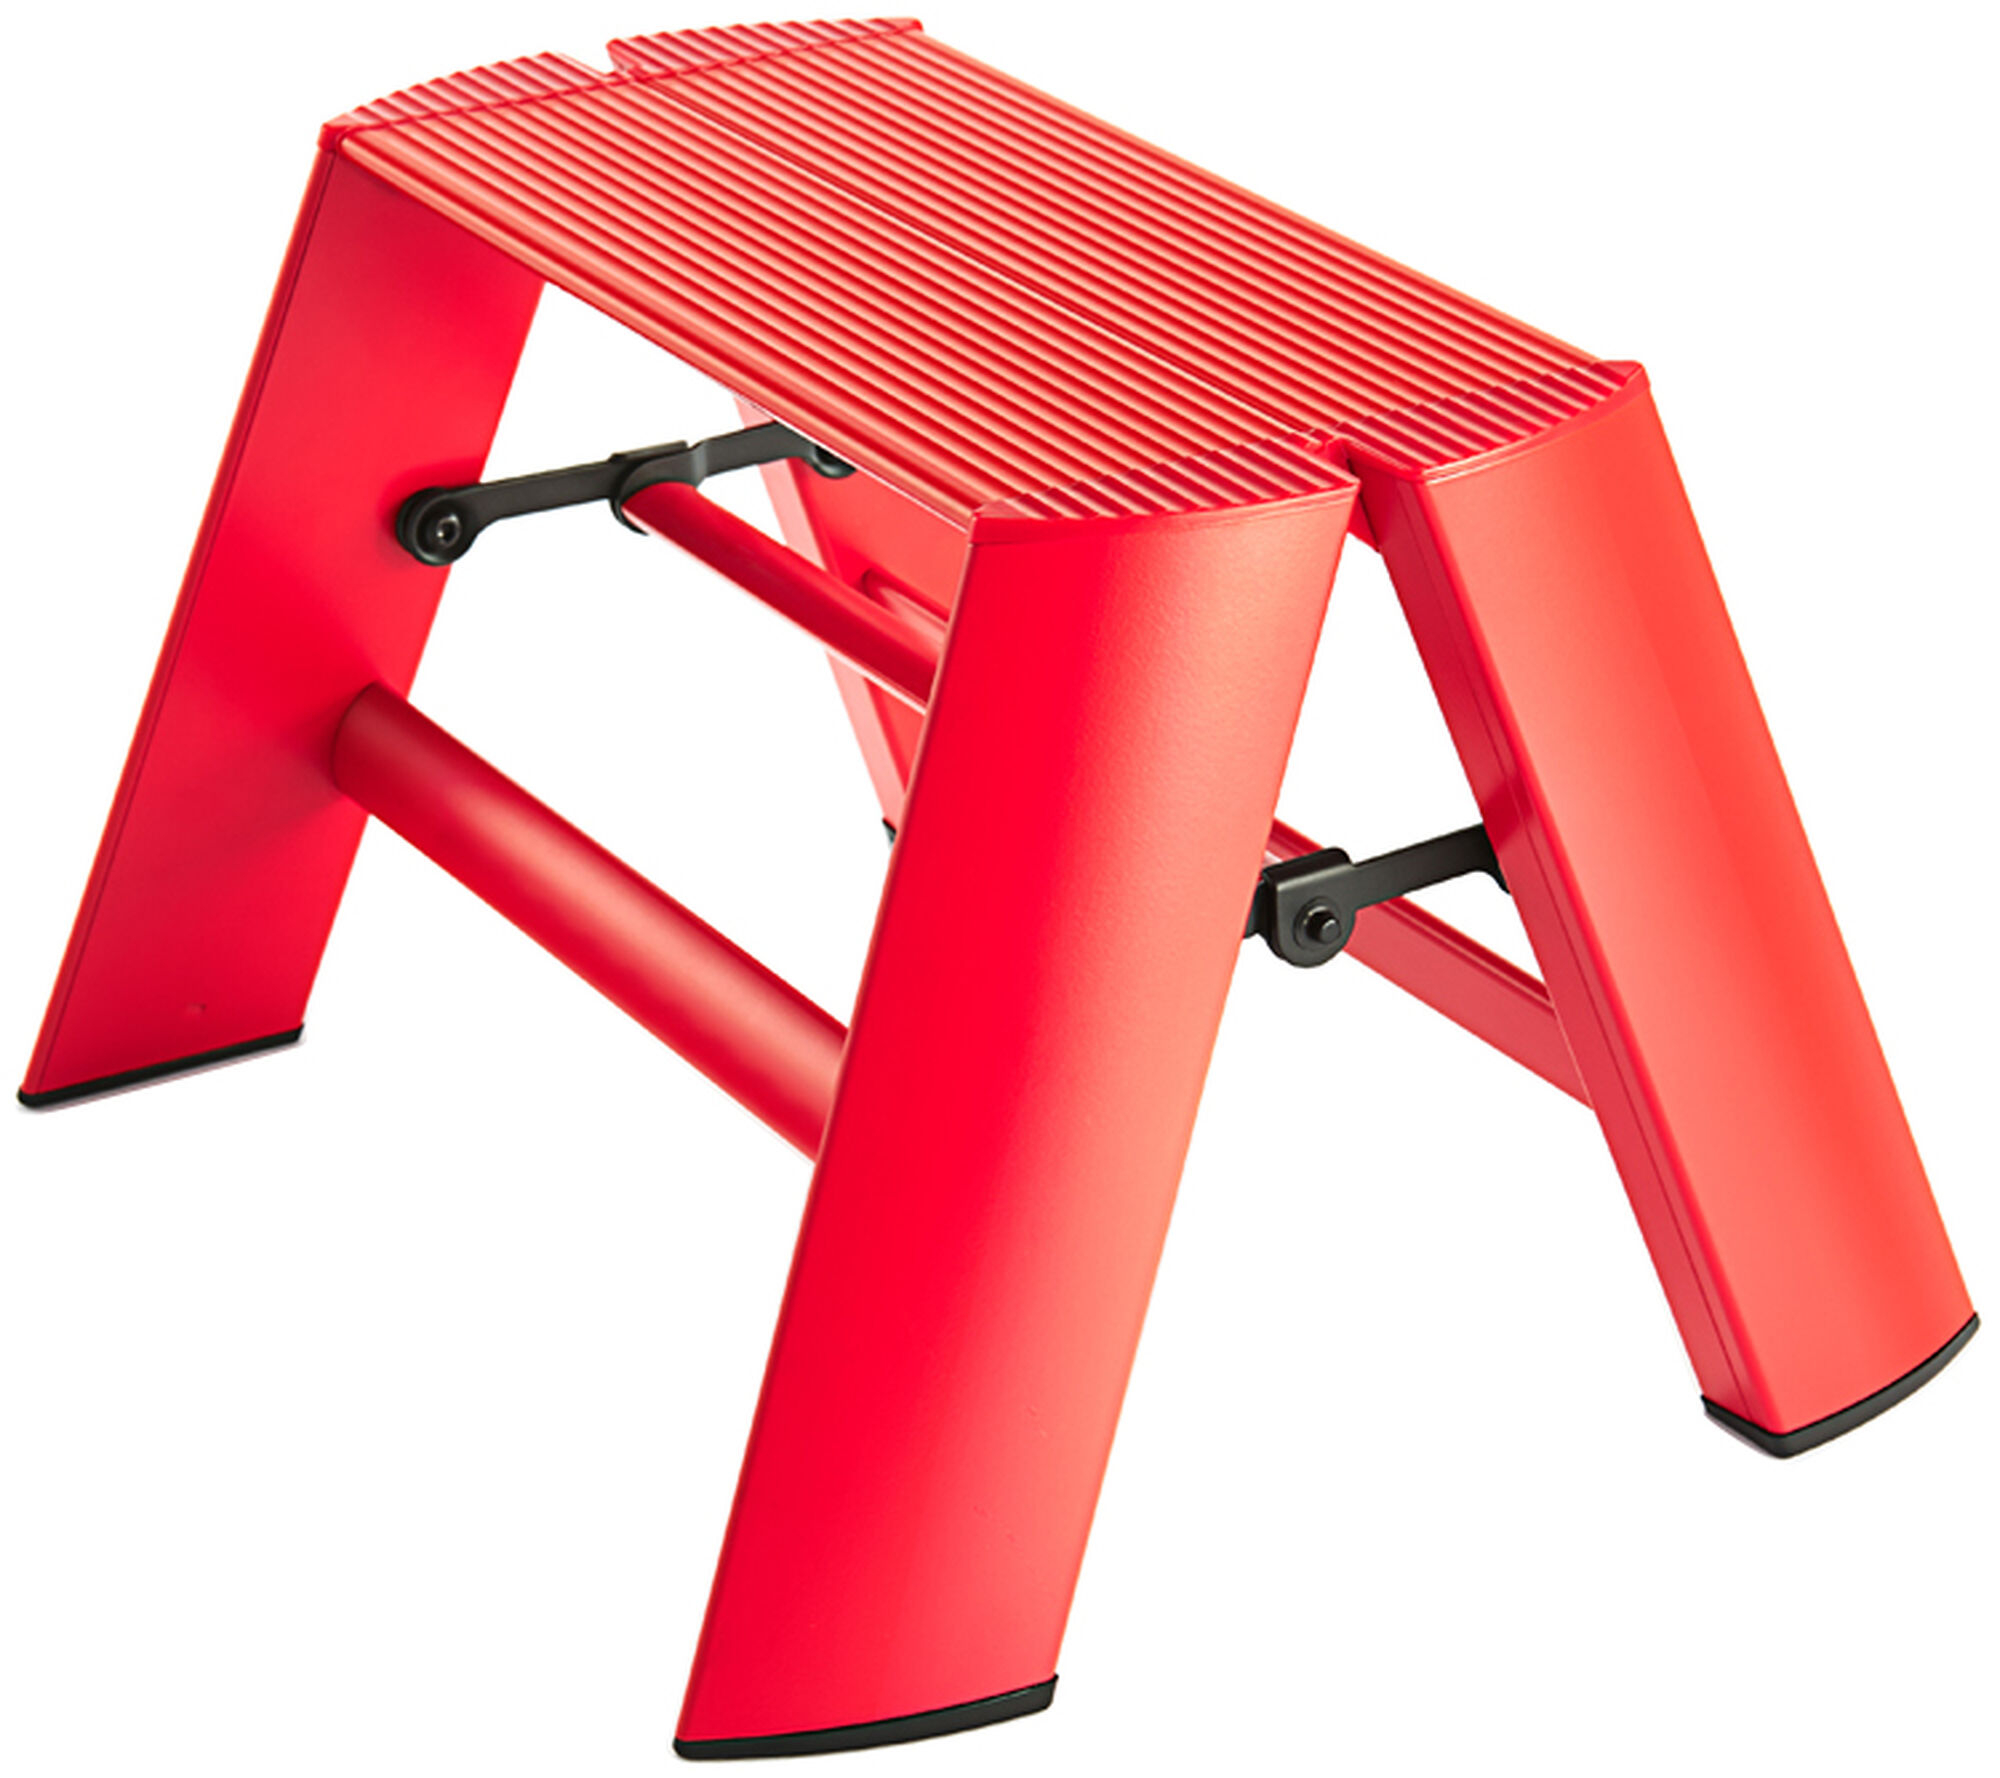 Mini step stool (1 step), red - Lucano